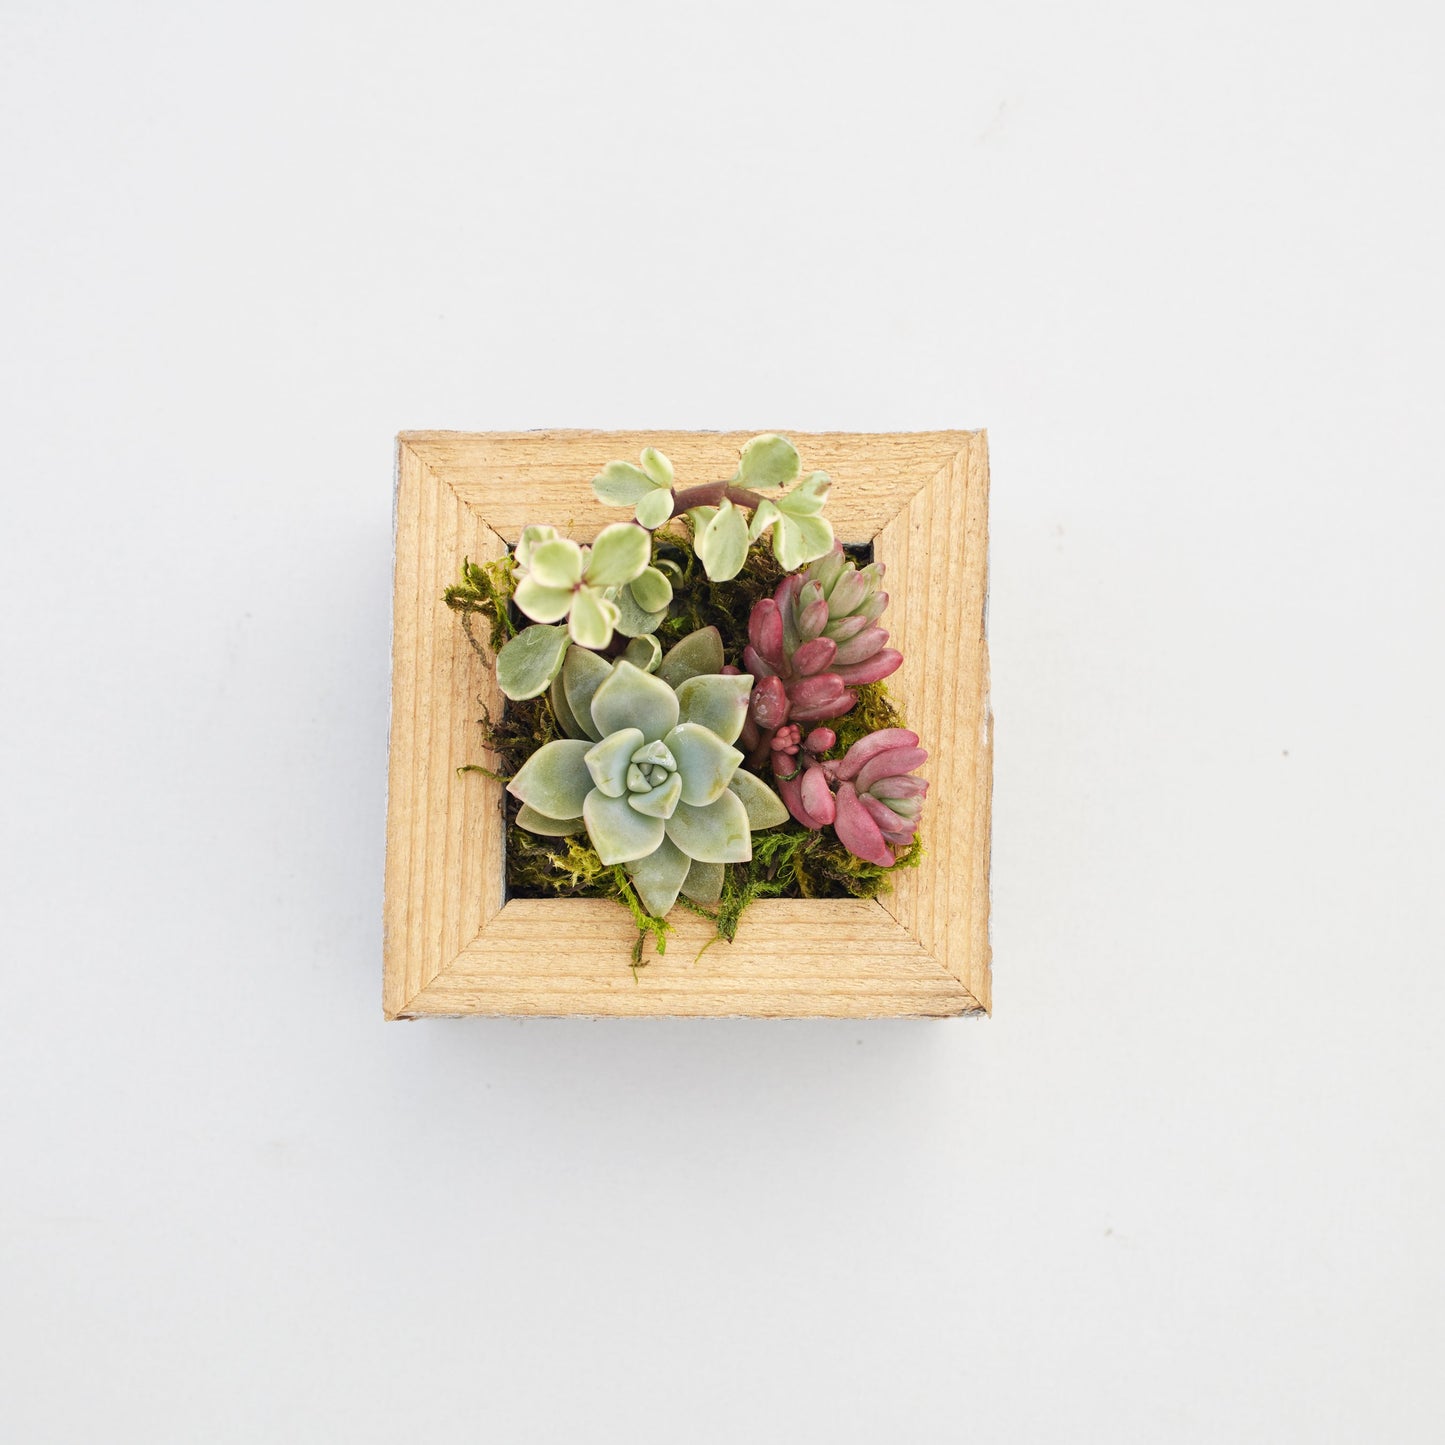 Small Succulent Planter Kit